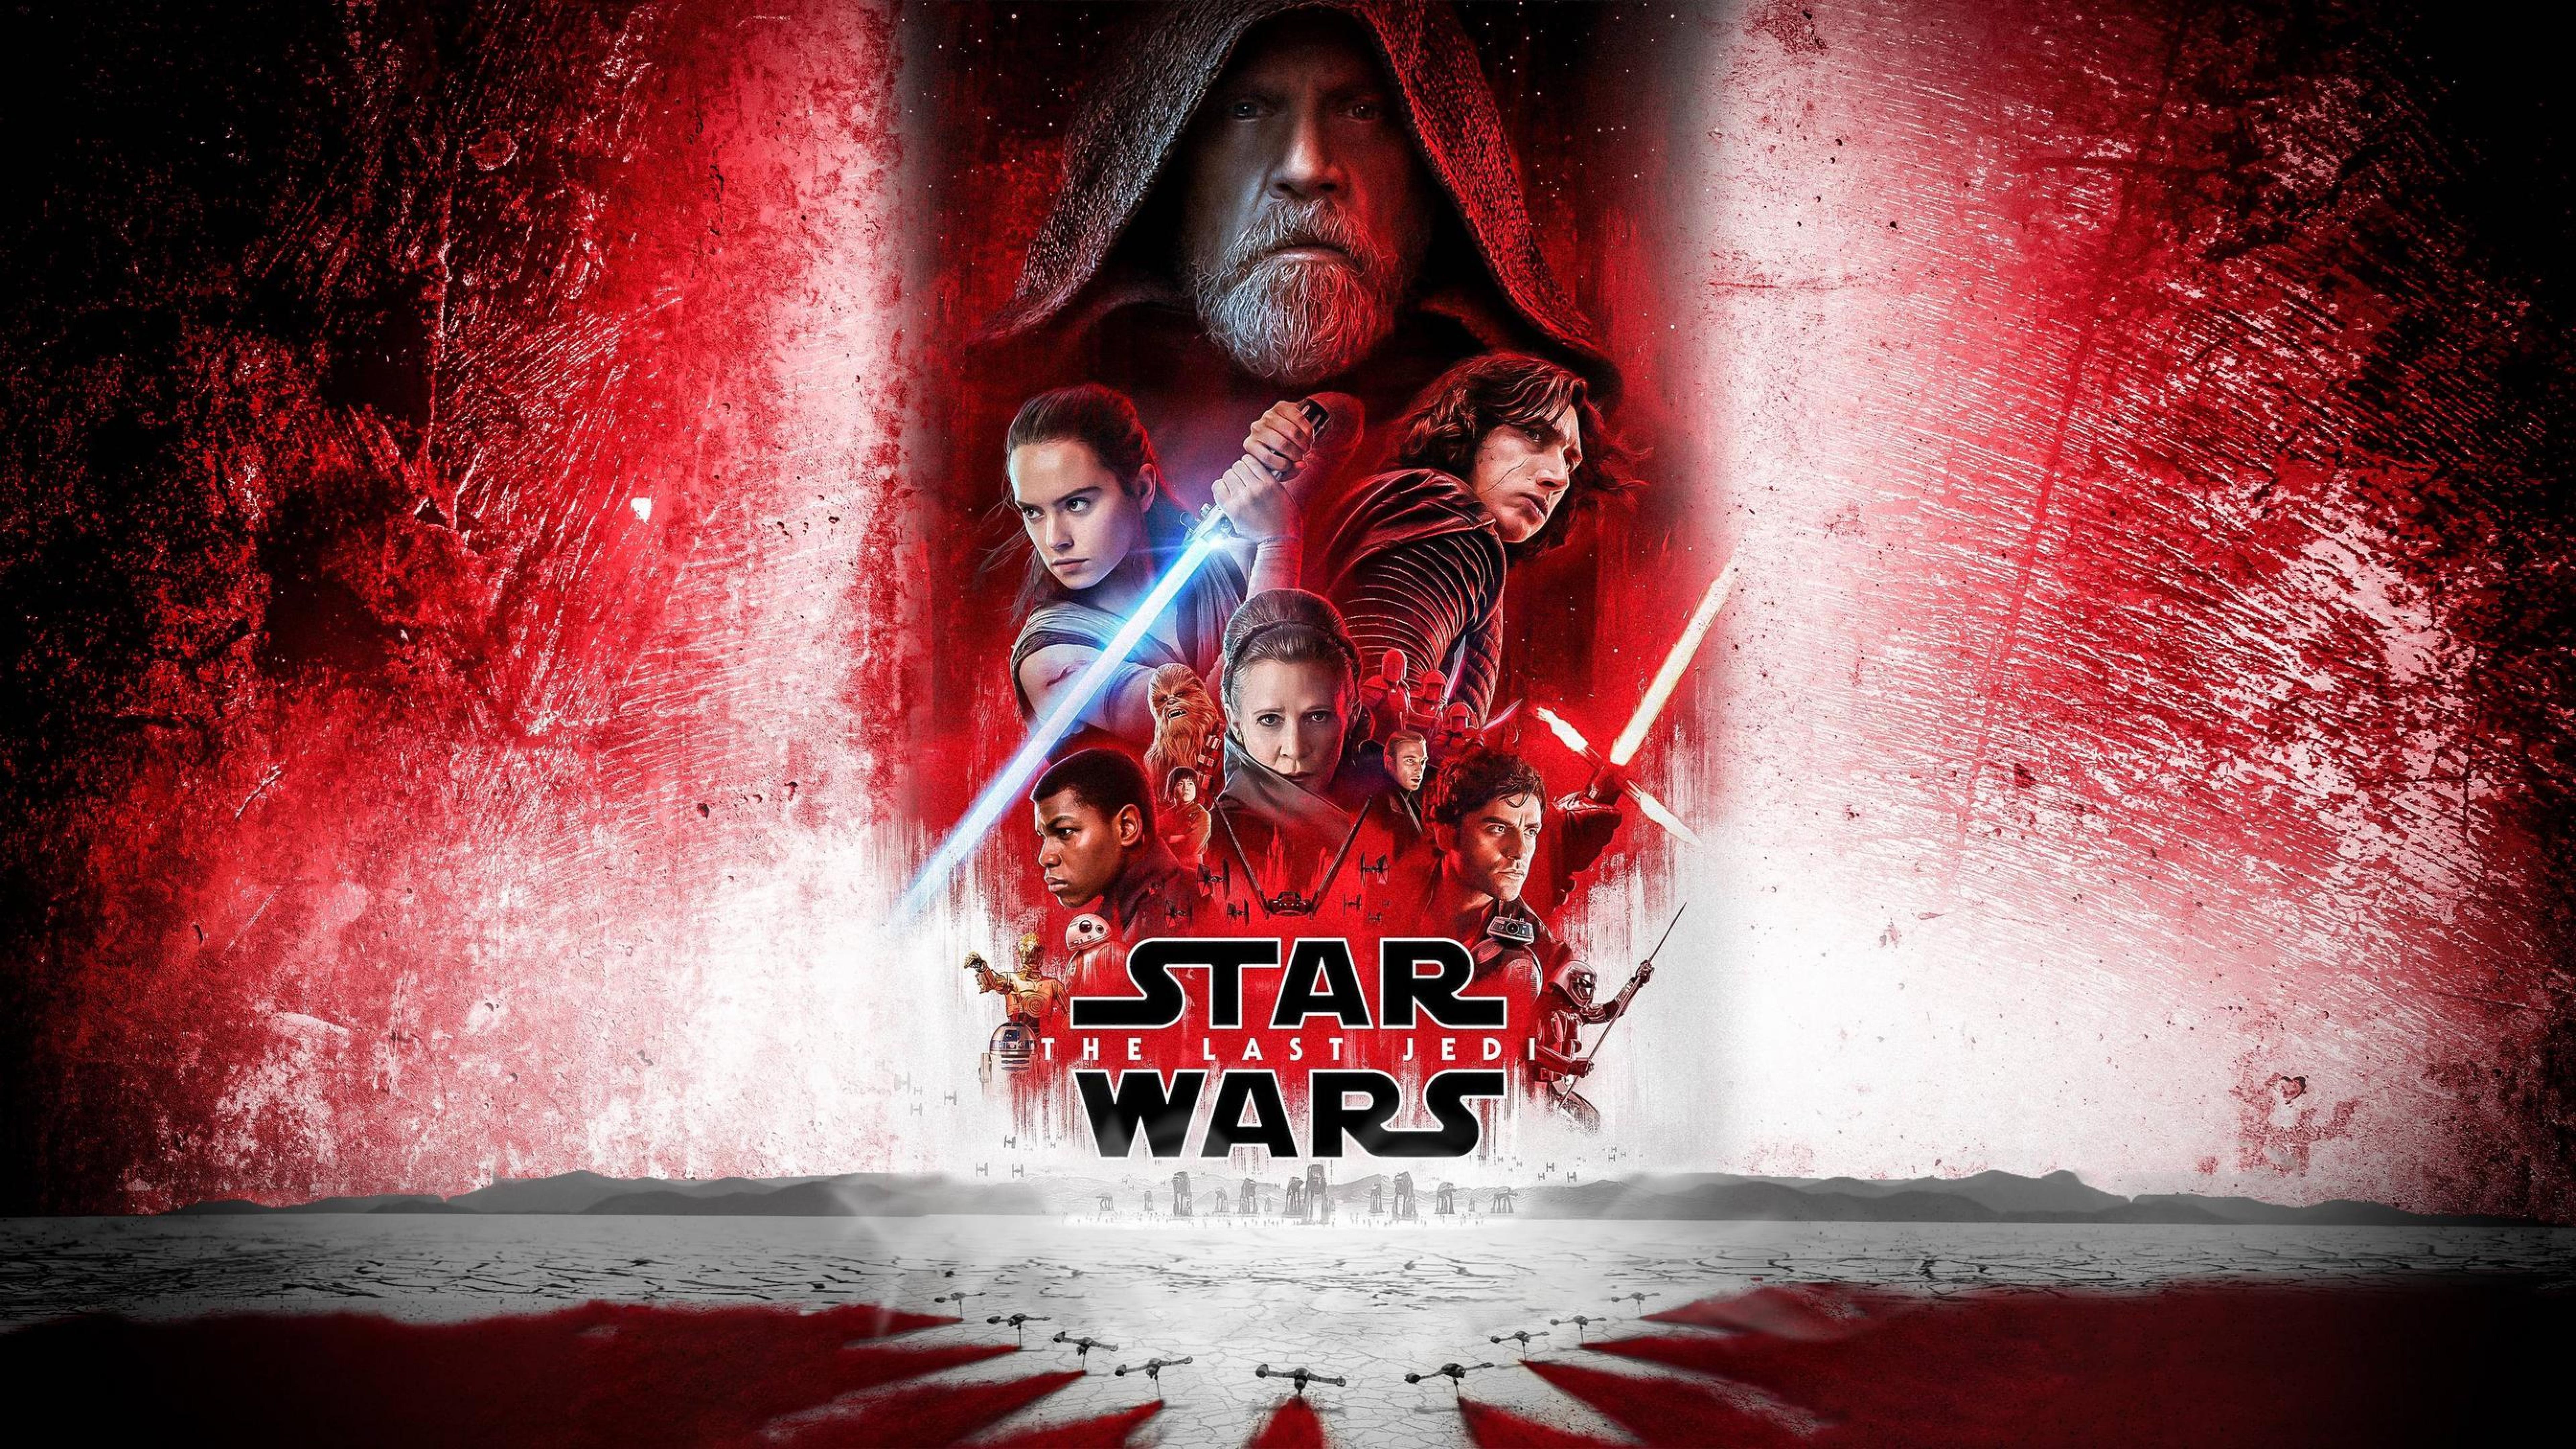 Джедаи 2017. Постер Star Wars: the last Jedi. Звёздные войны эпизод 8 Постер. Звёздные войны последние джедаи Постер. Звездные войны 8 последние джедаи Постер.